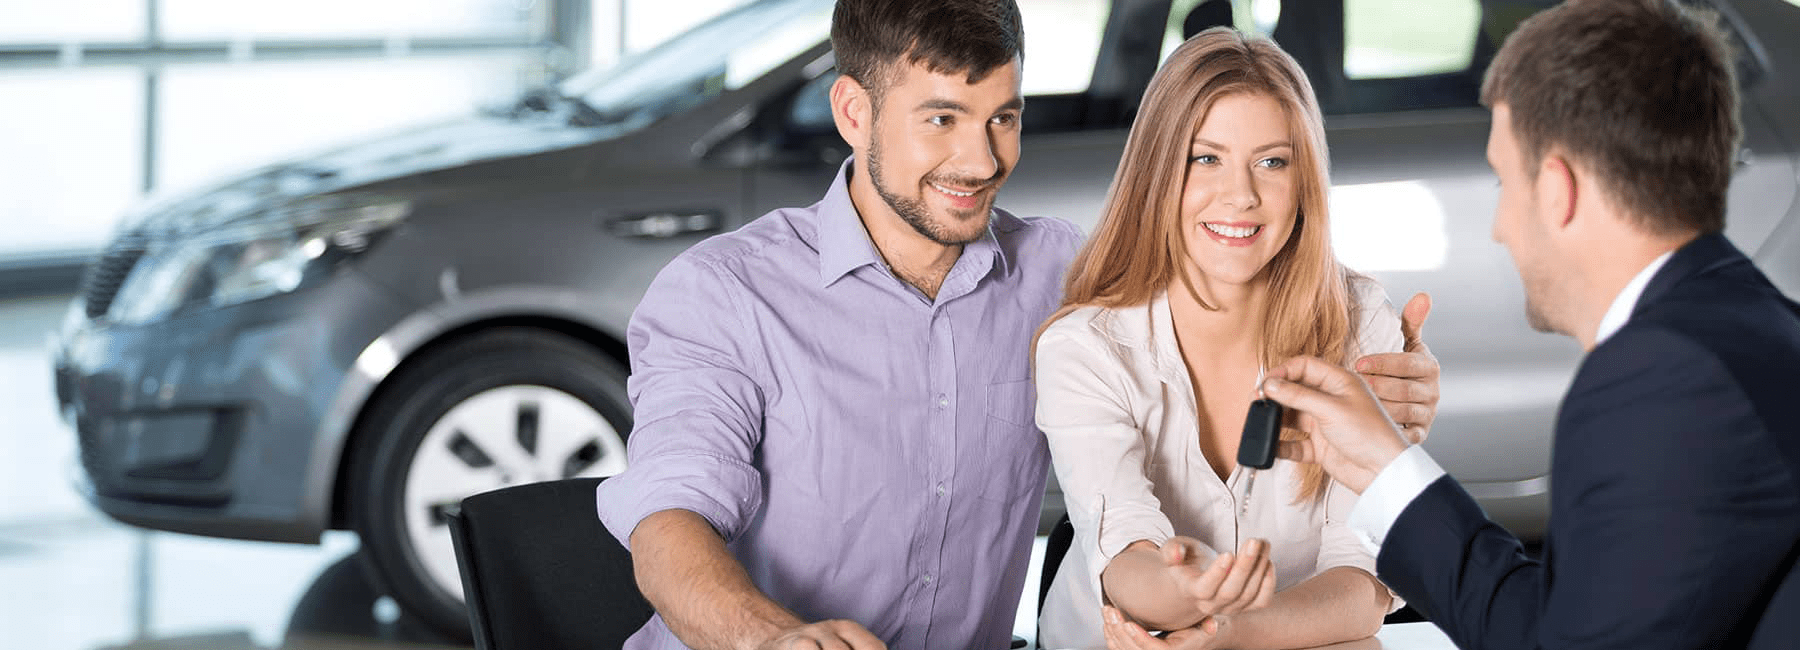 dealer-hands-new-car-keys-to-smiling-couple